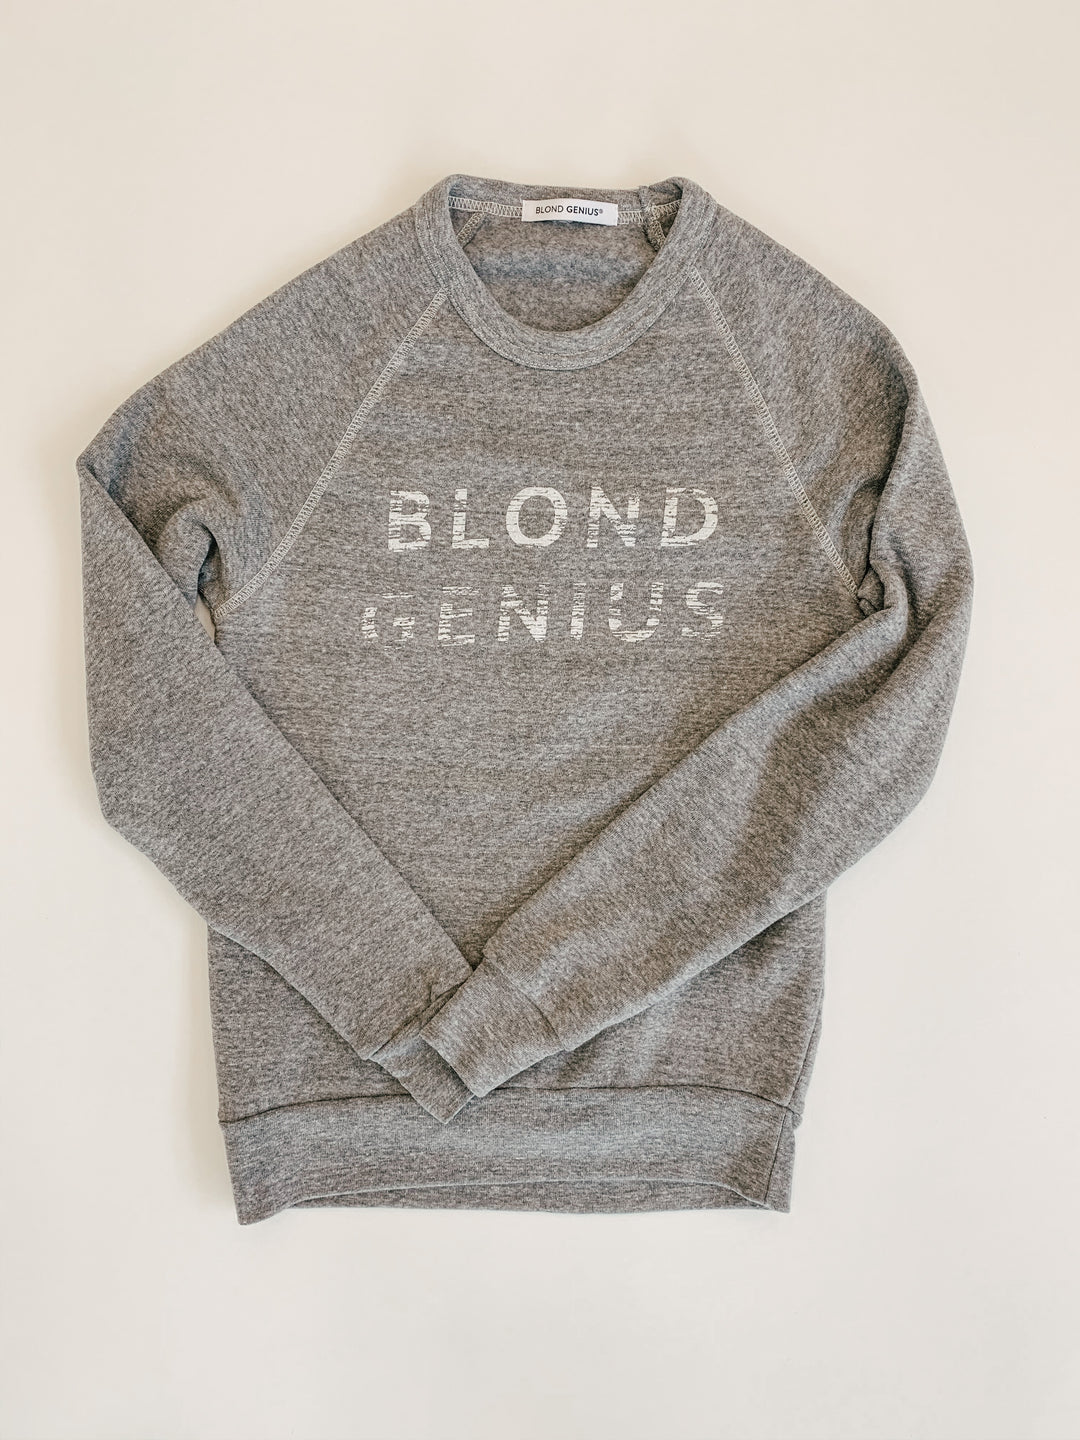 Blond Genius - Distressed Logo Sweatshirt in Heather Grey